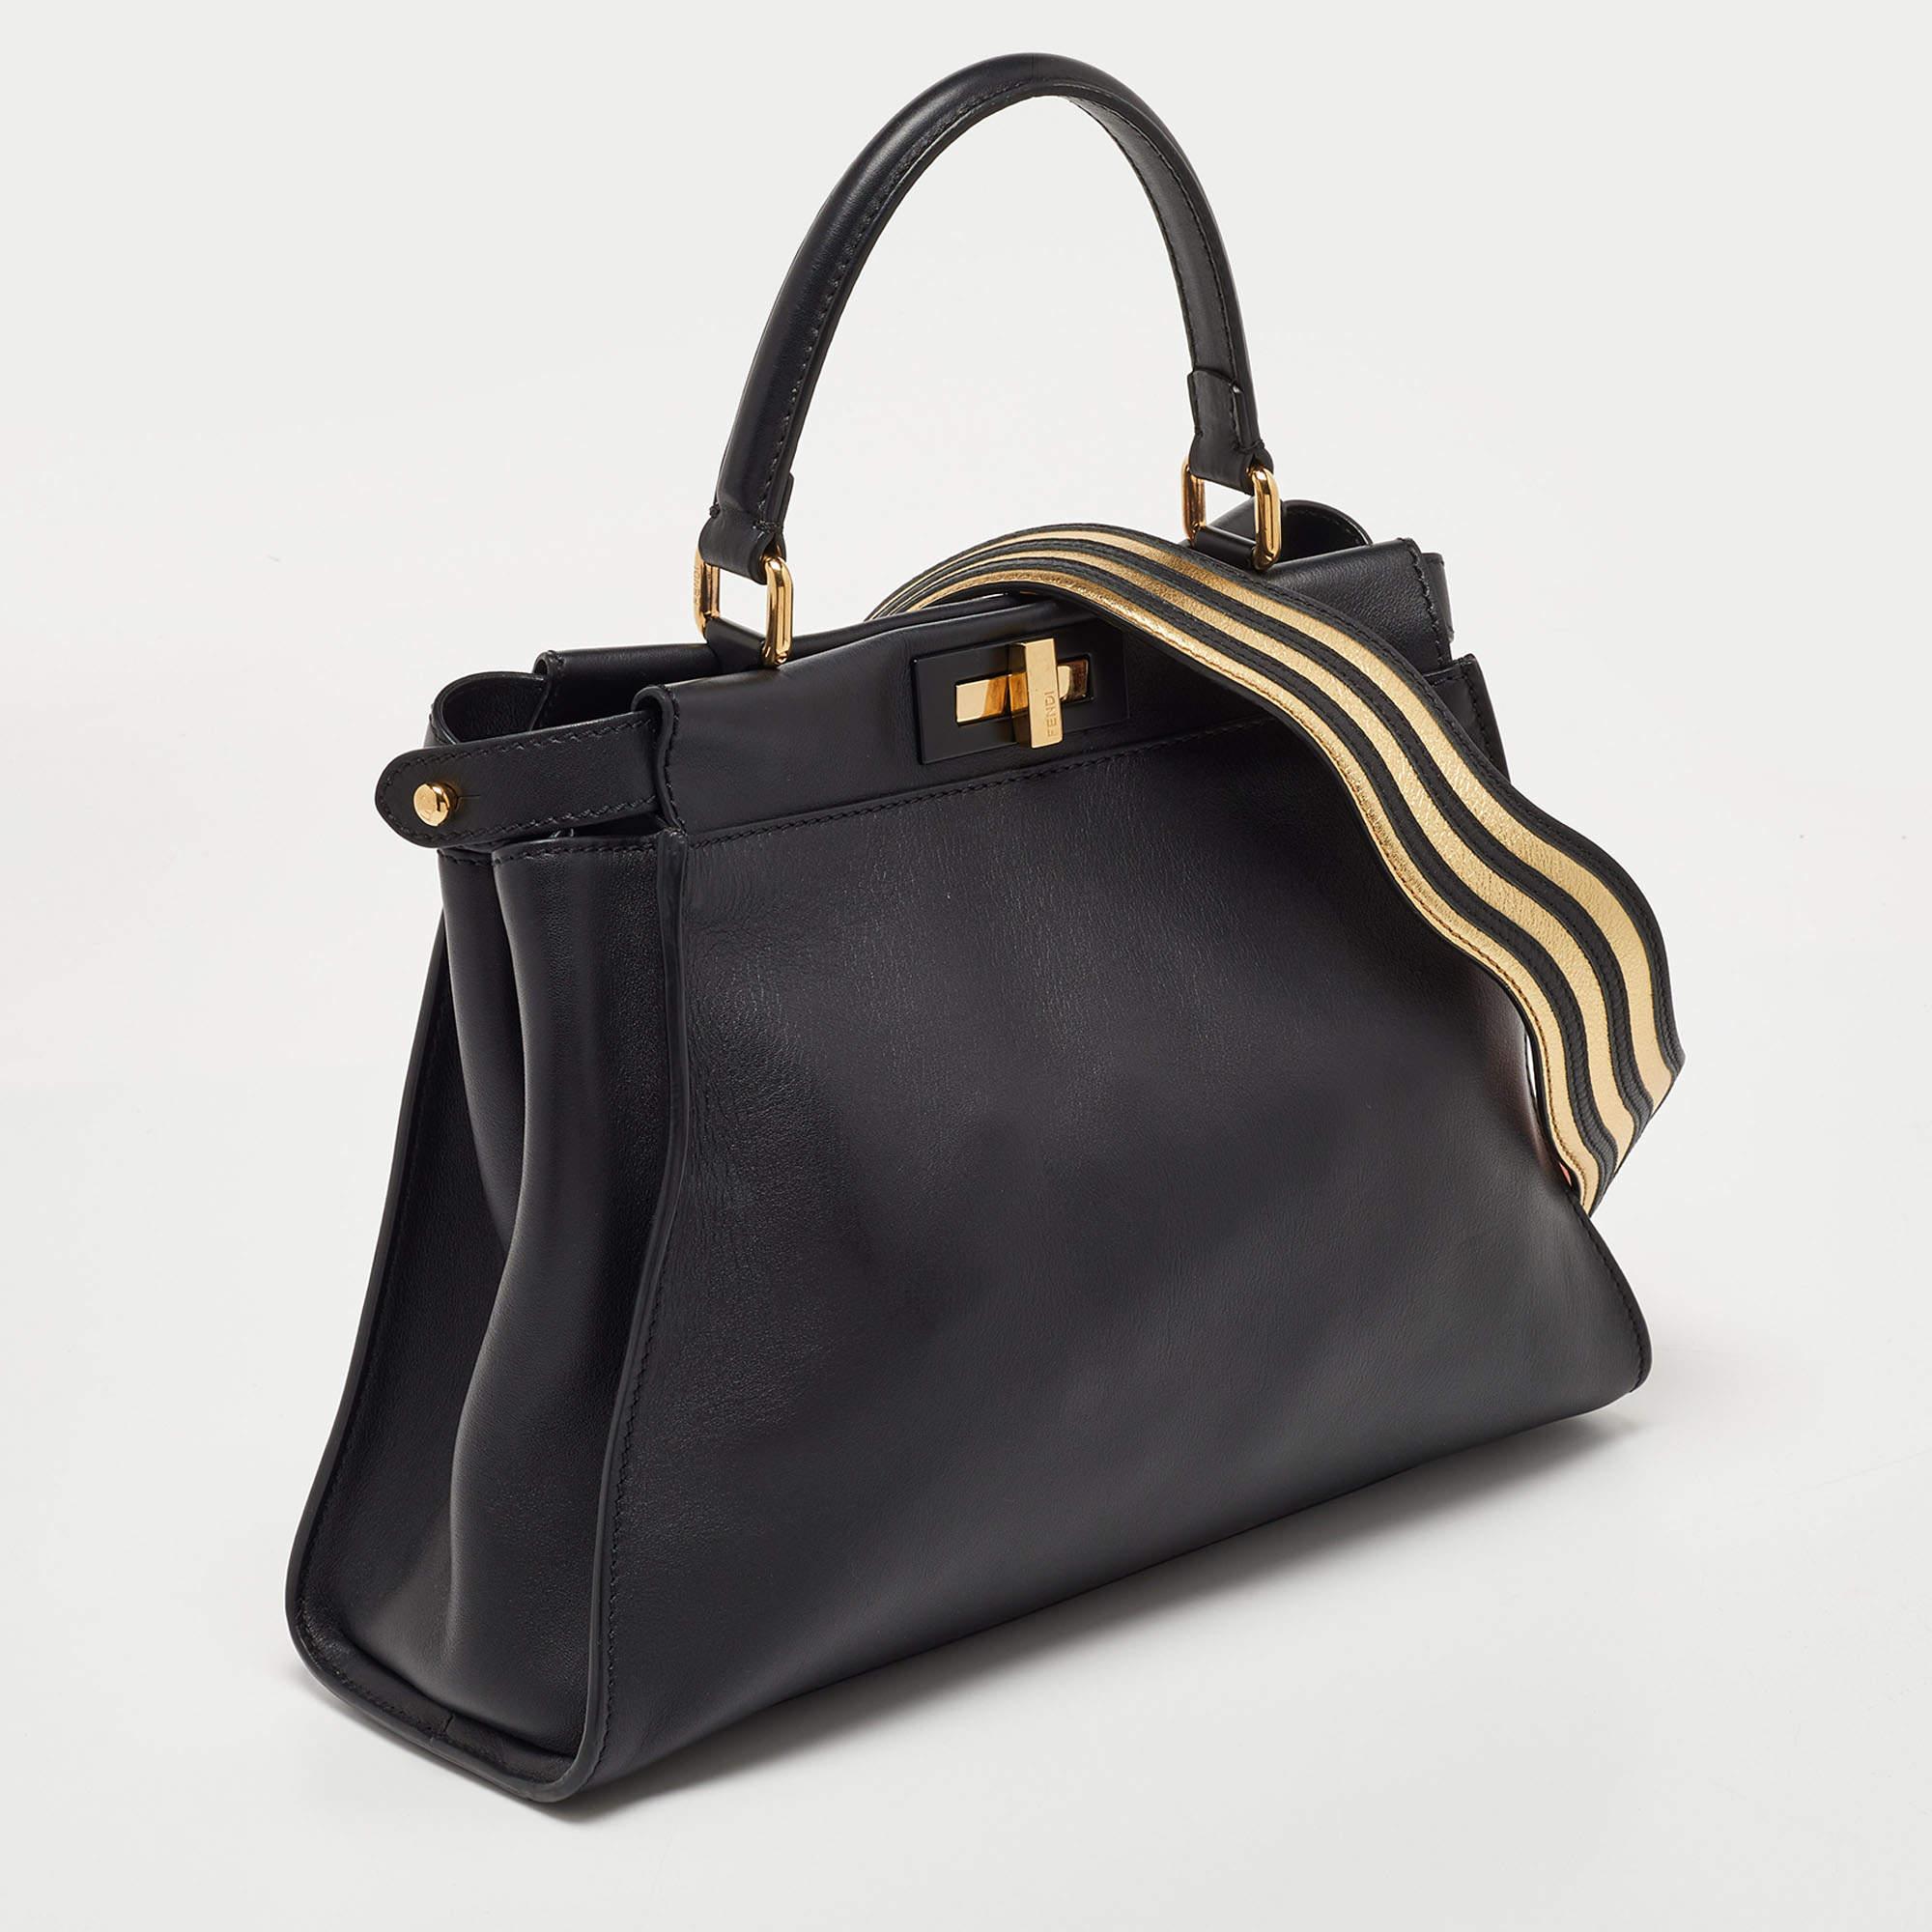 Fendi Black Leather Regular Peekaboo Top Handle Bag In Good Condition For Sale In Dubai, Al Qouz 2